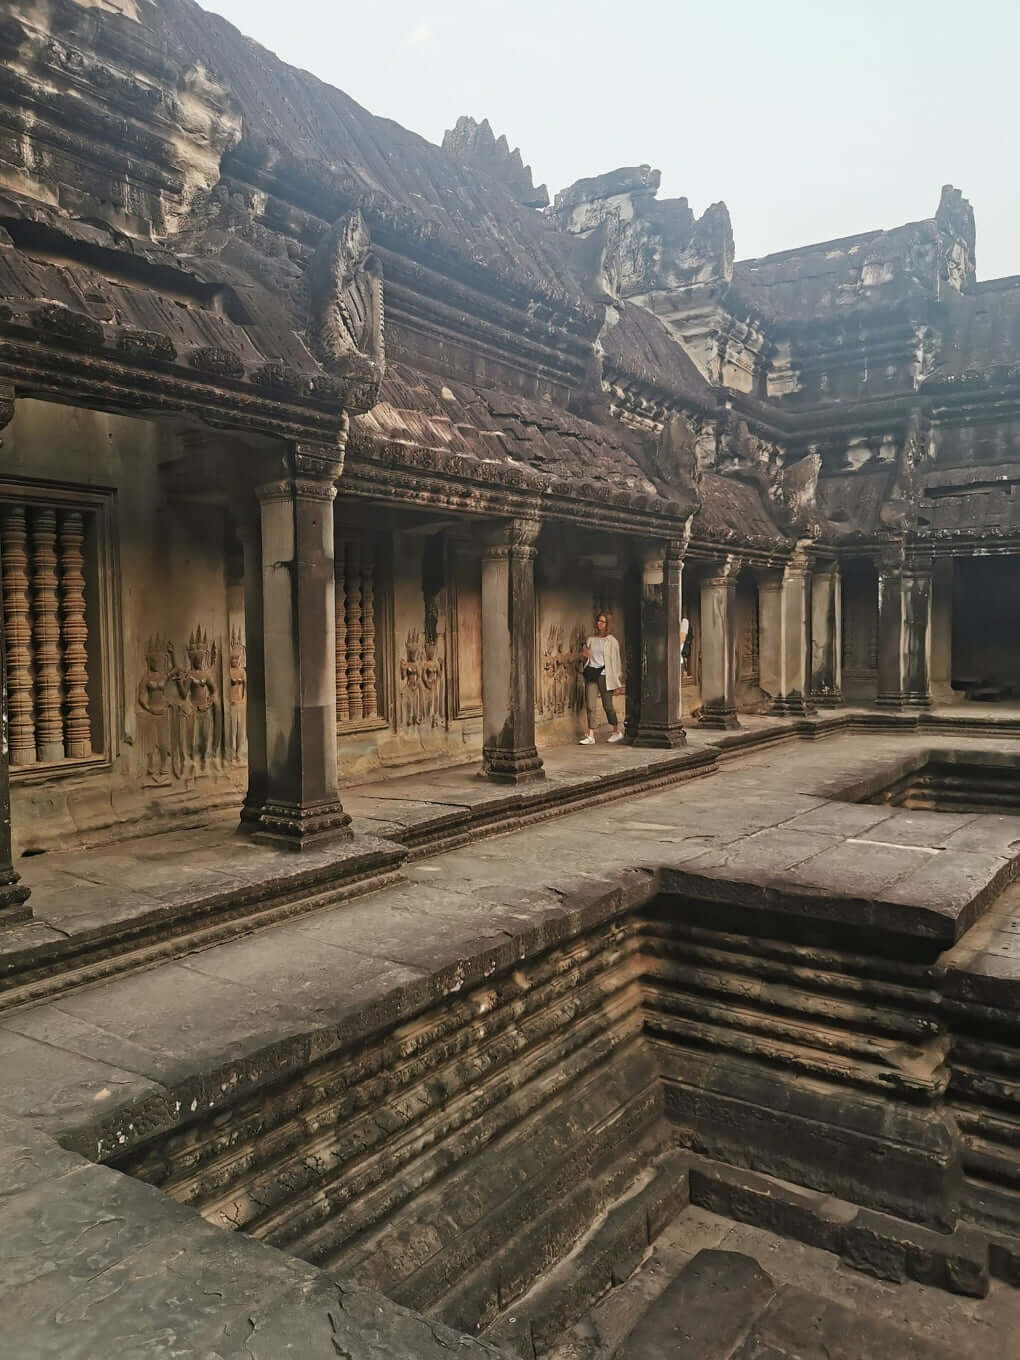 cambodia-itinerary-8-days-siem-reap-angkor-wat-5.jpeg